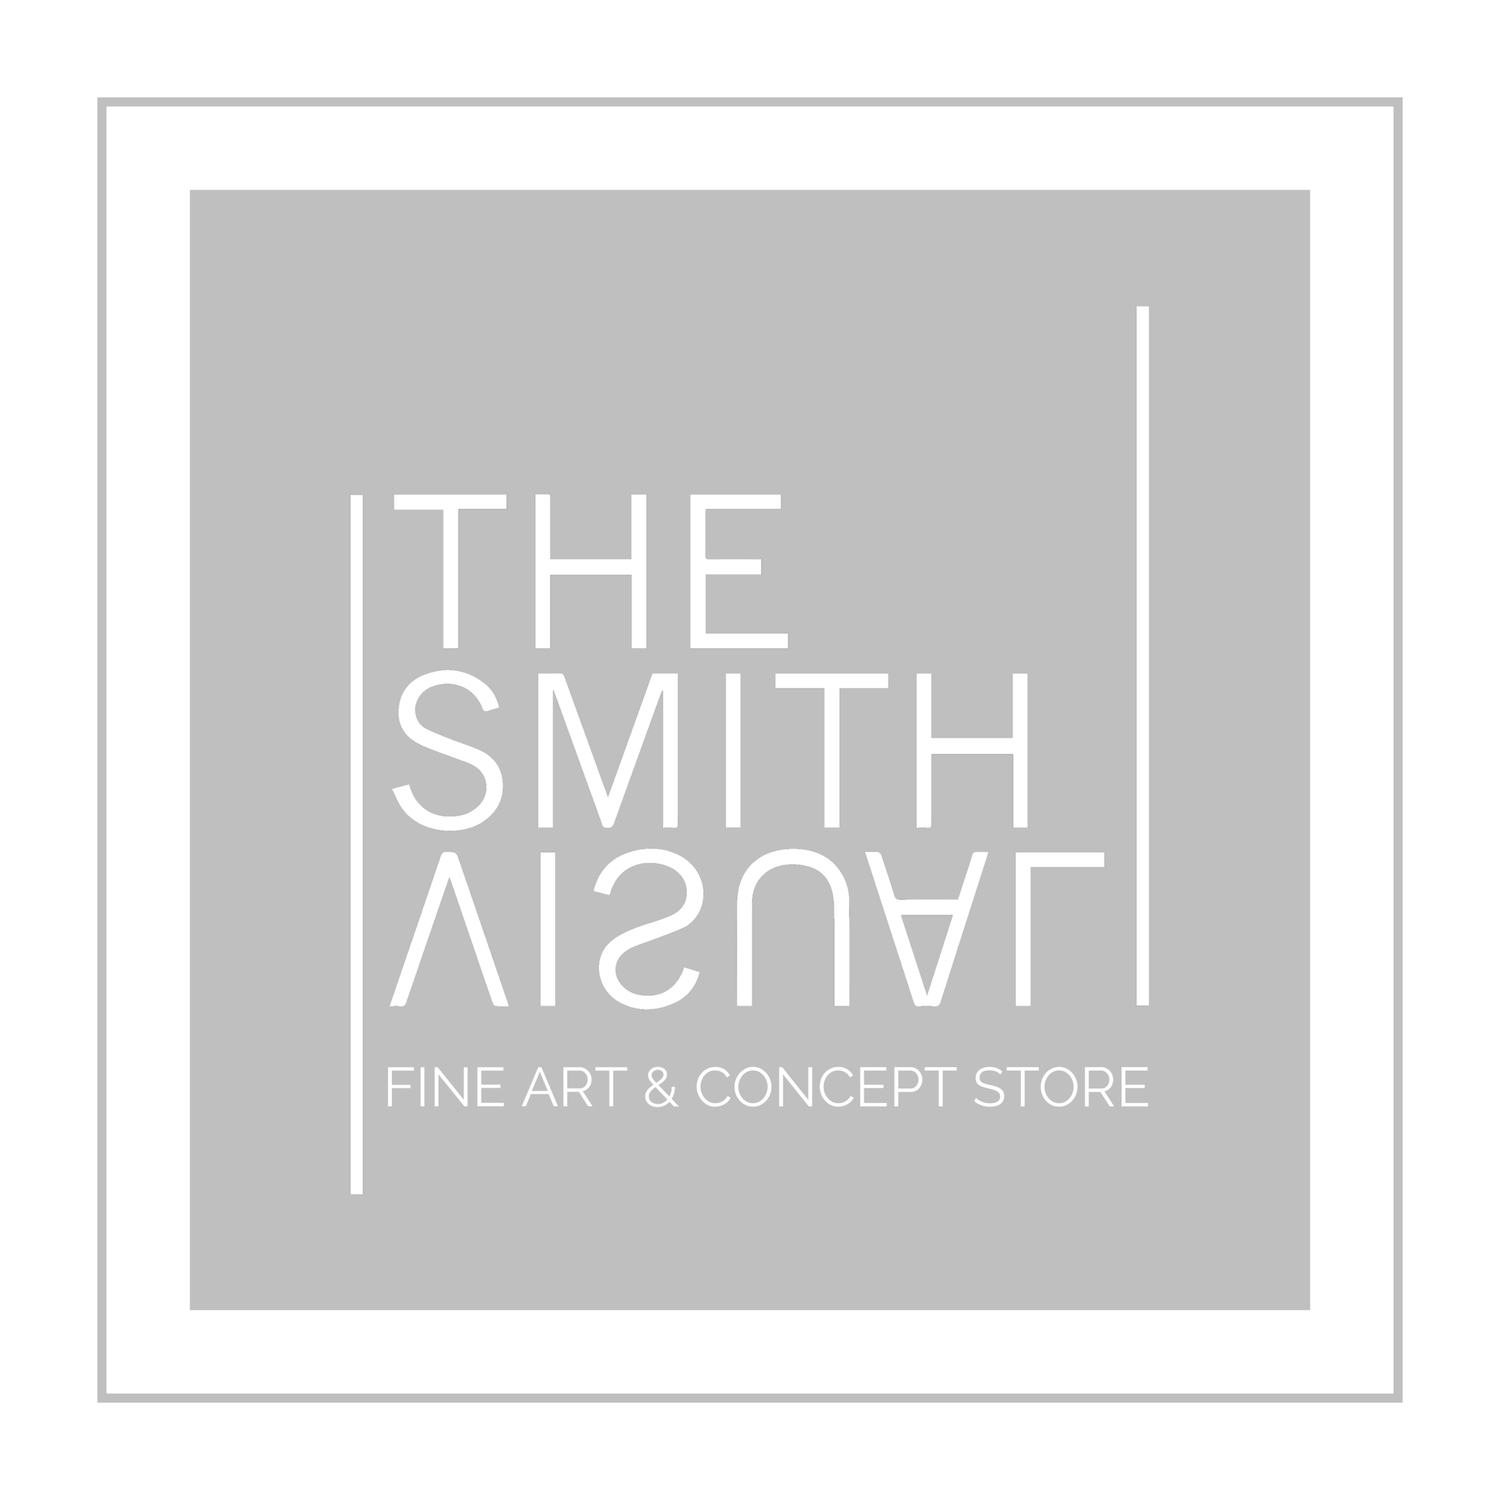 The Smith Visual